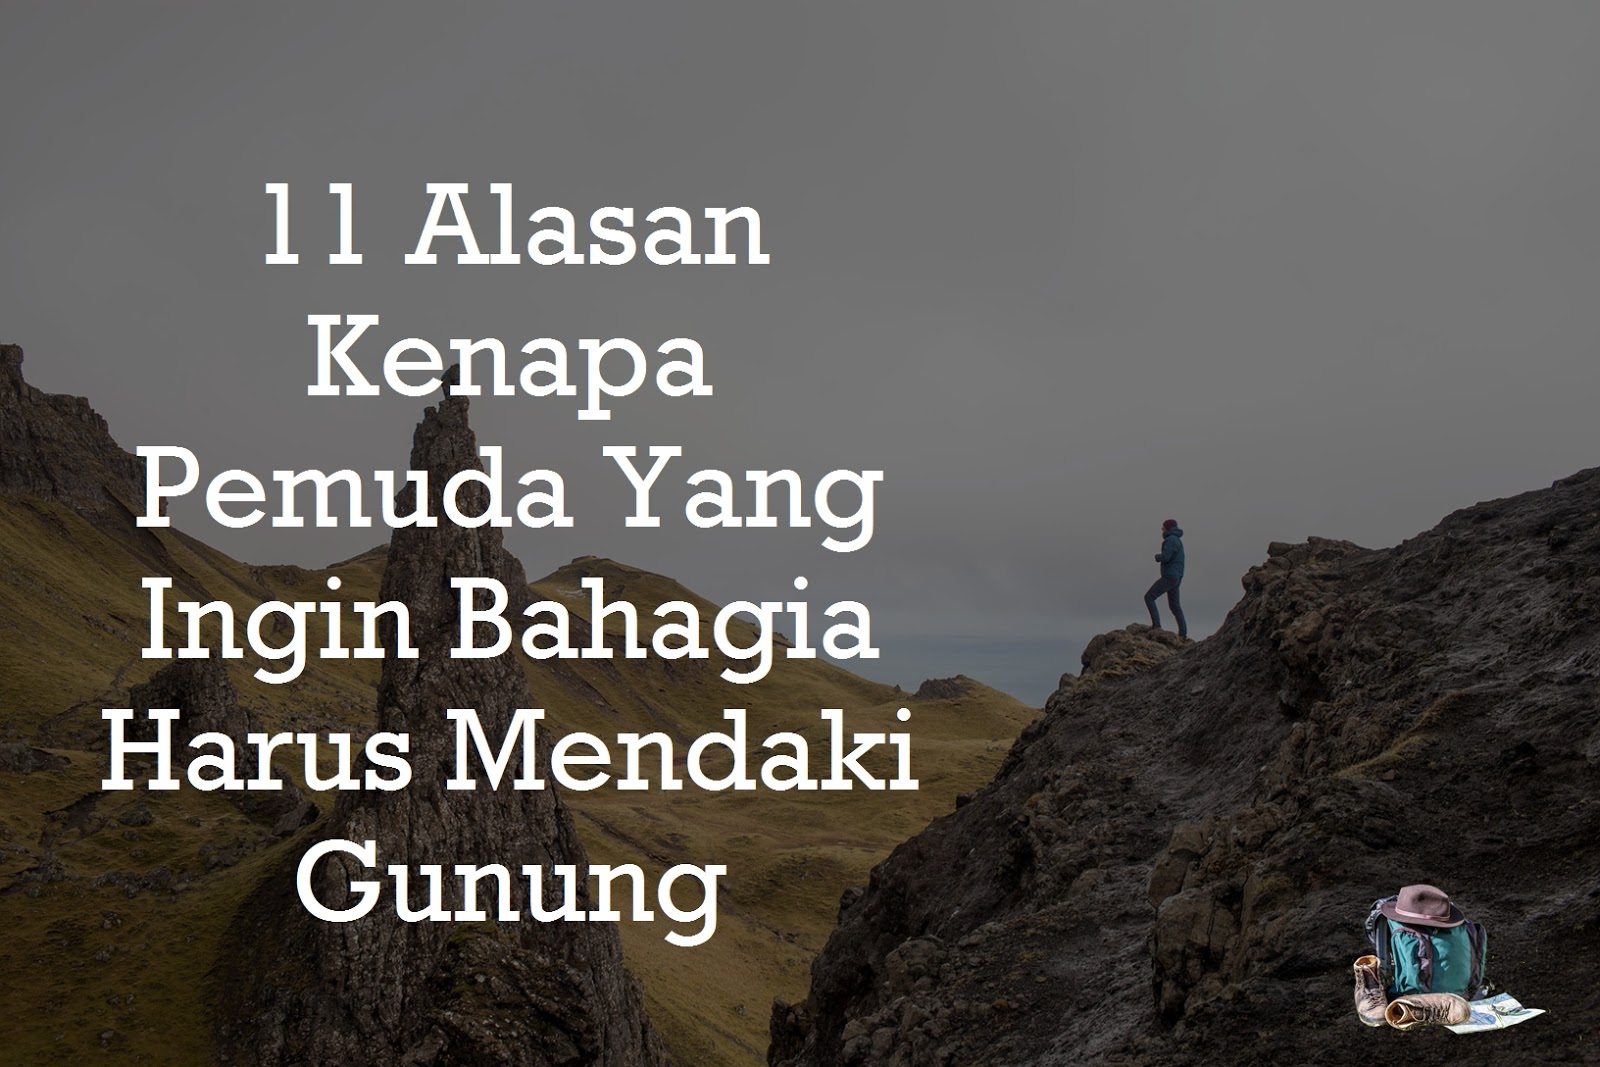 11 Alasan Kenapa Pemuda Yang Ingin Bahagia Harus Mendaki Gunung